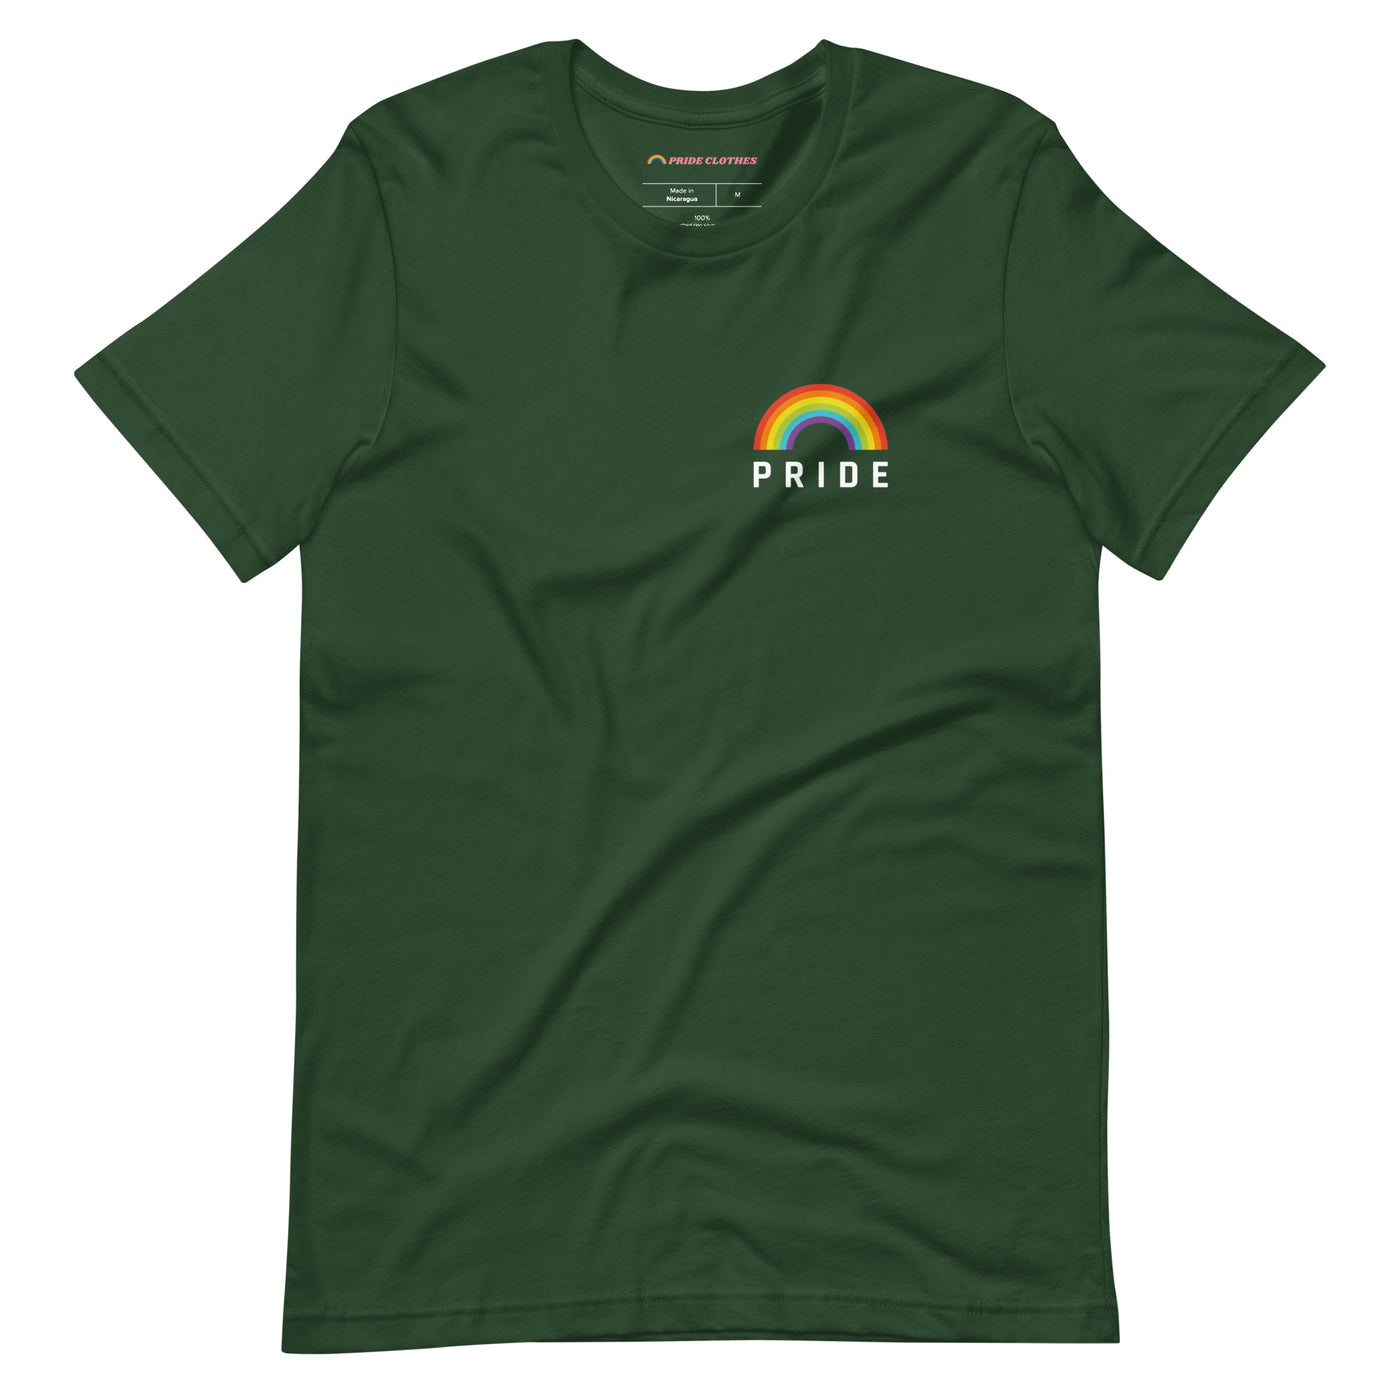 Pride Clothes - Got Pride? Astounding Rainbow Pride Clothes T-Shirt - Forest